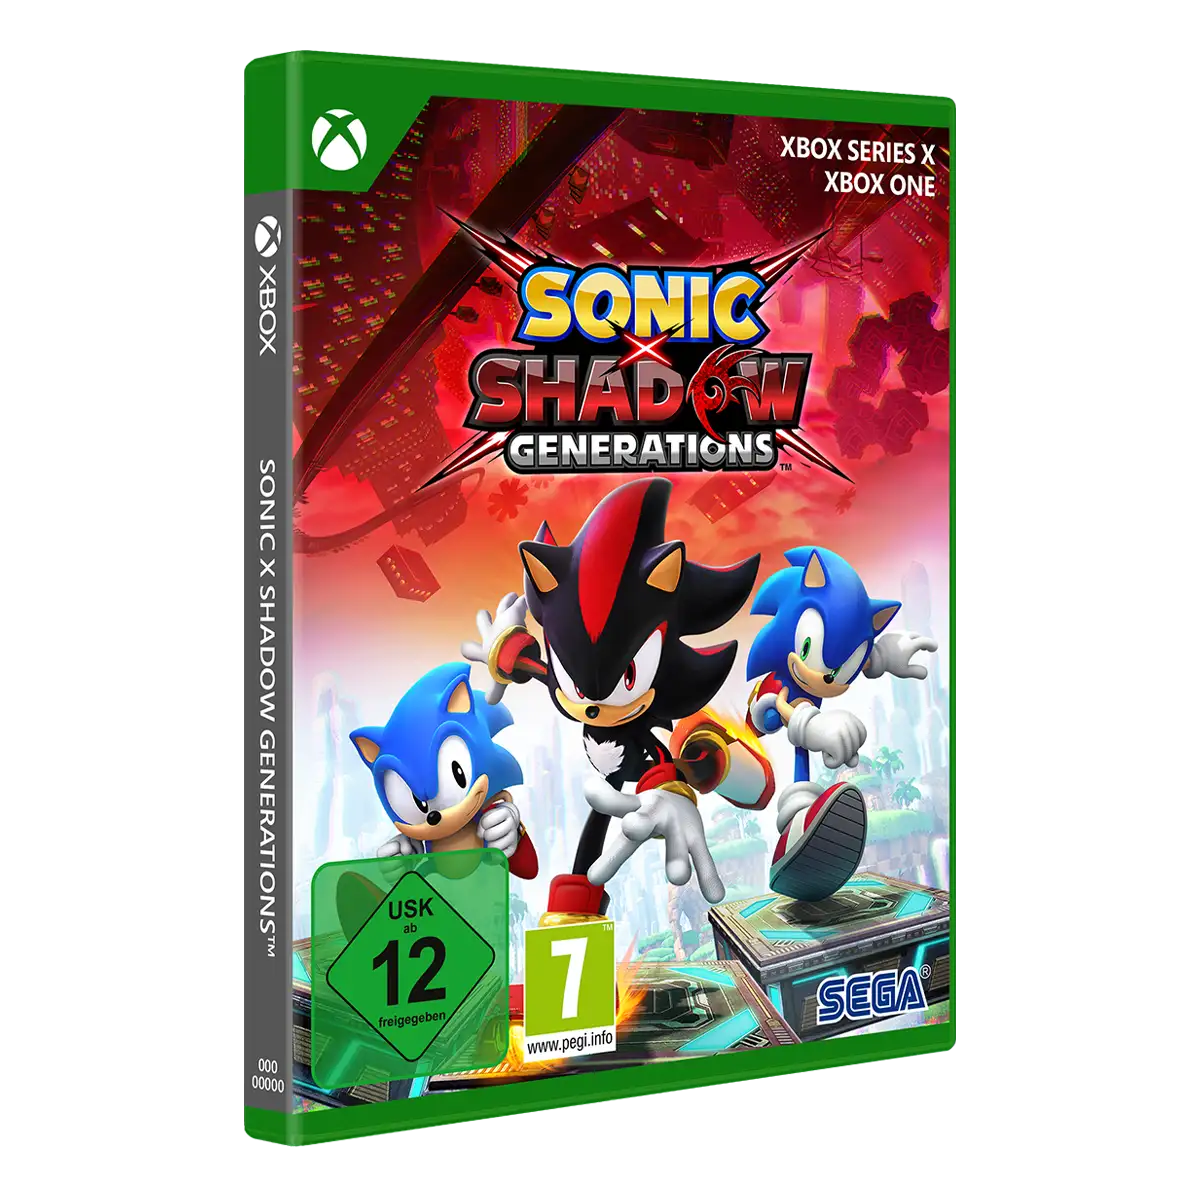 Sonic x Shadow Generations (XONE/XSRX) Image 3